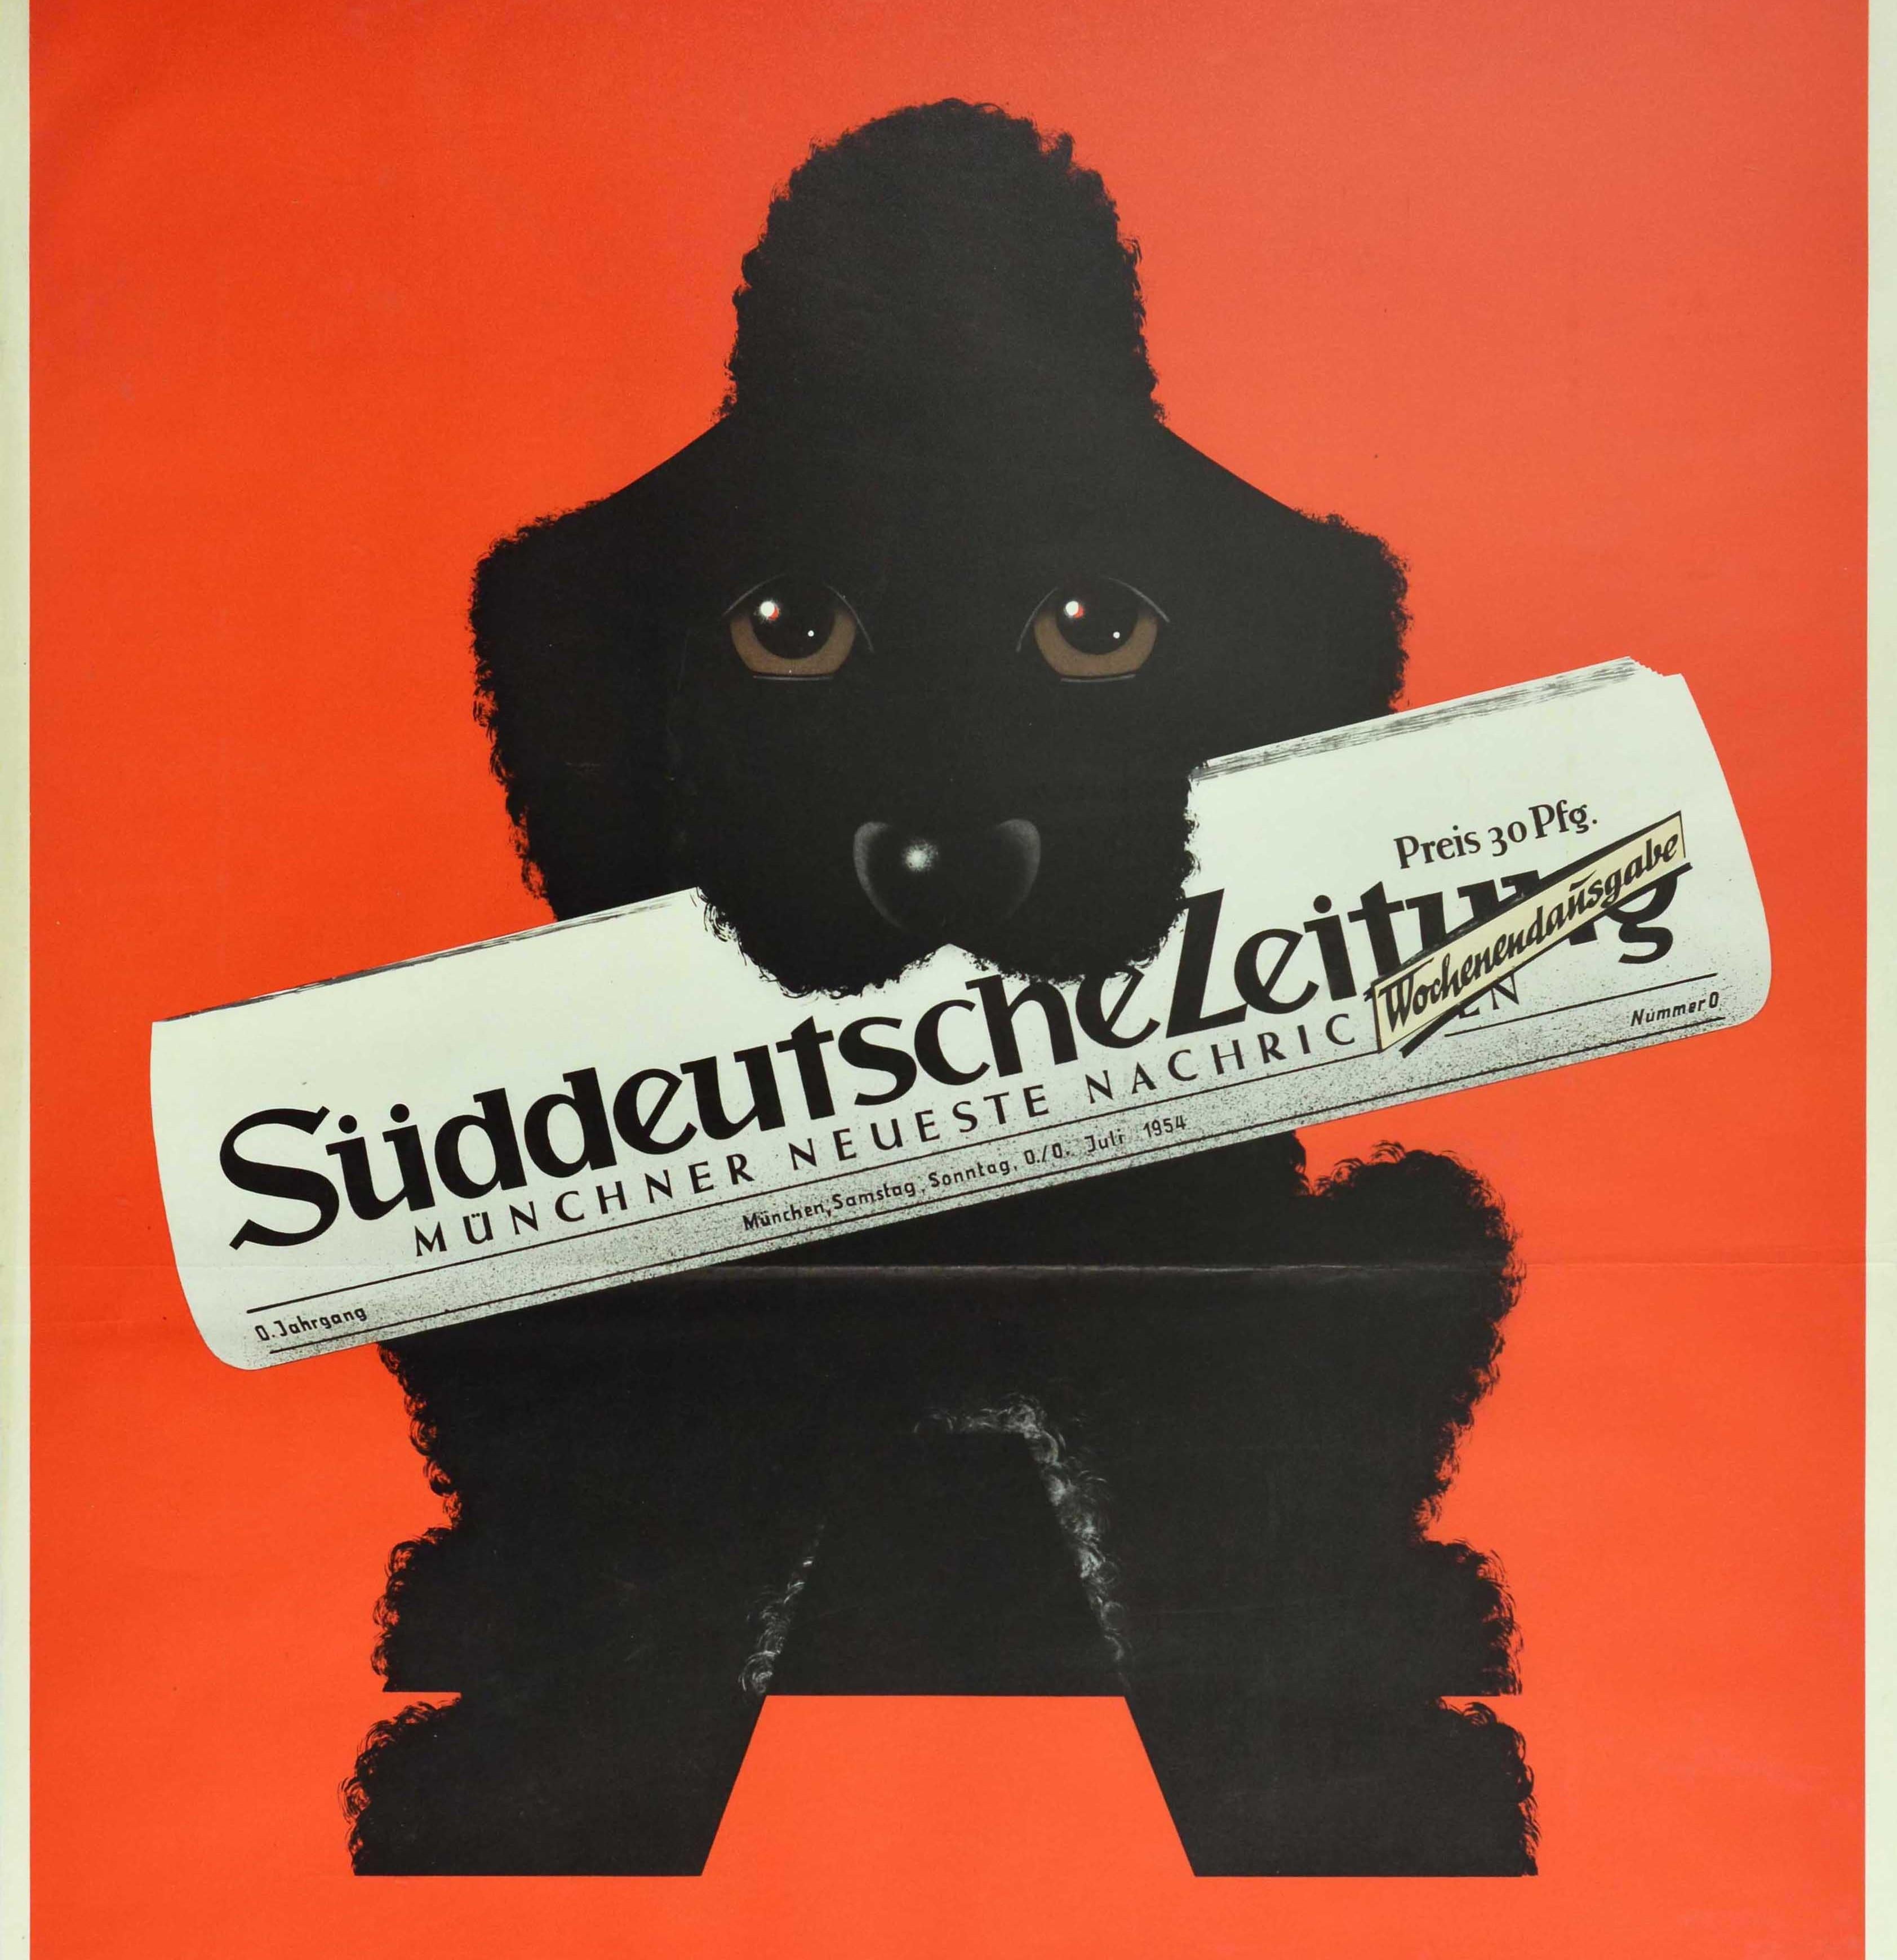 Paper Original Vintage Poster Suddeutsche Zeitung Newspaper Germany Poodle Dog Design